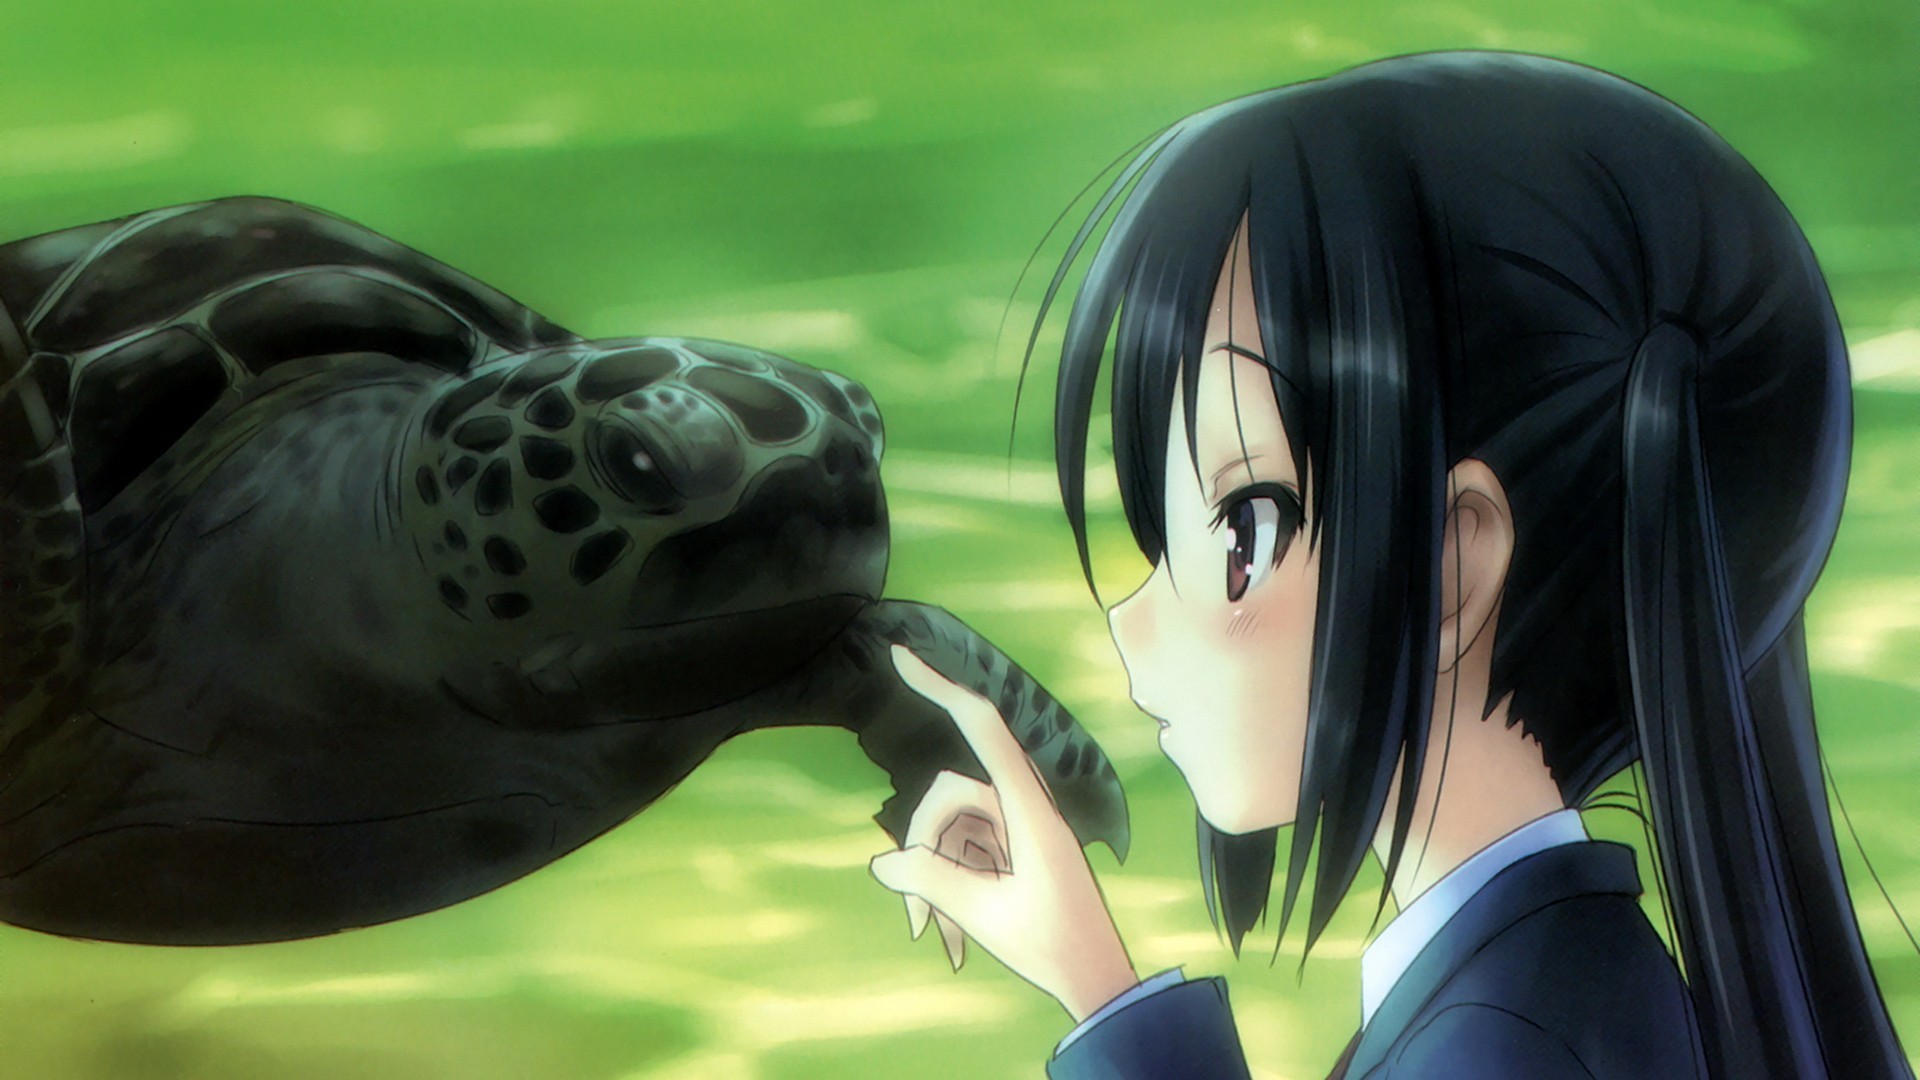 Anime 1920x1080 anime girls K-ON! Nakano Azusa turtle anime animals dark hair face profile green background